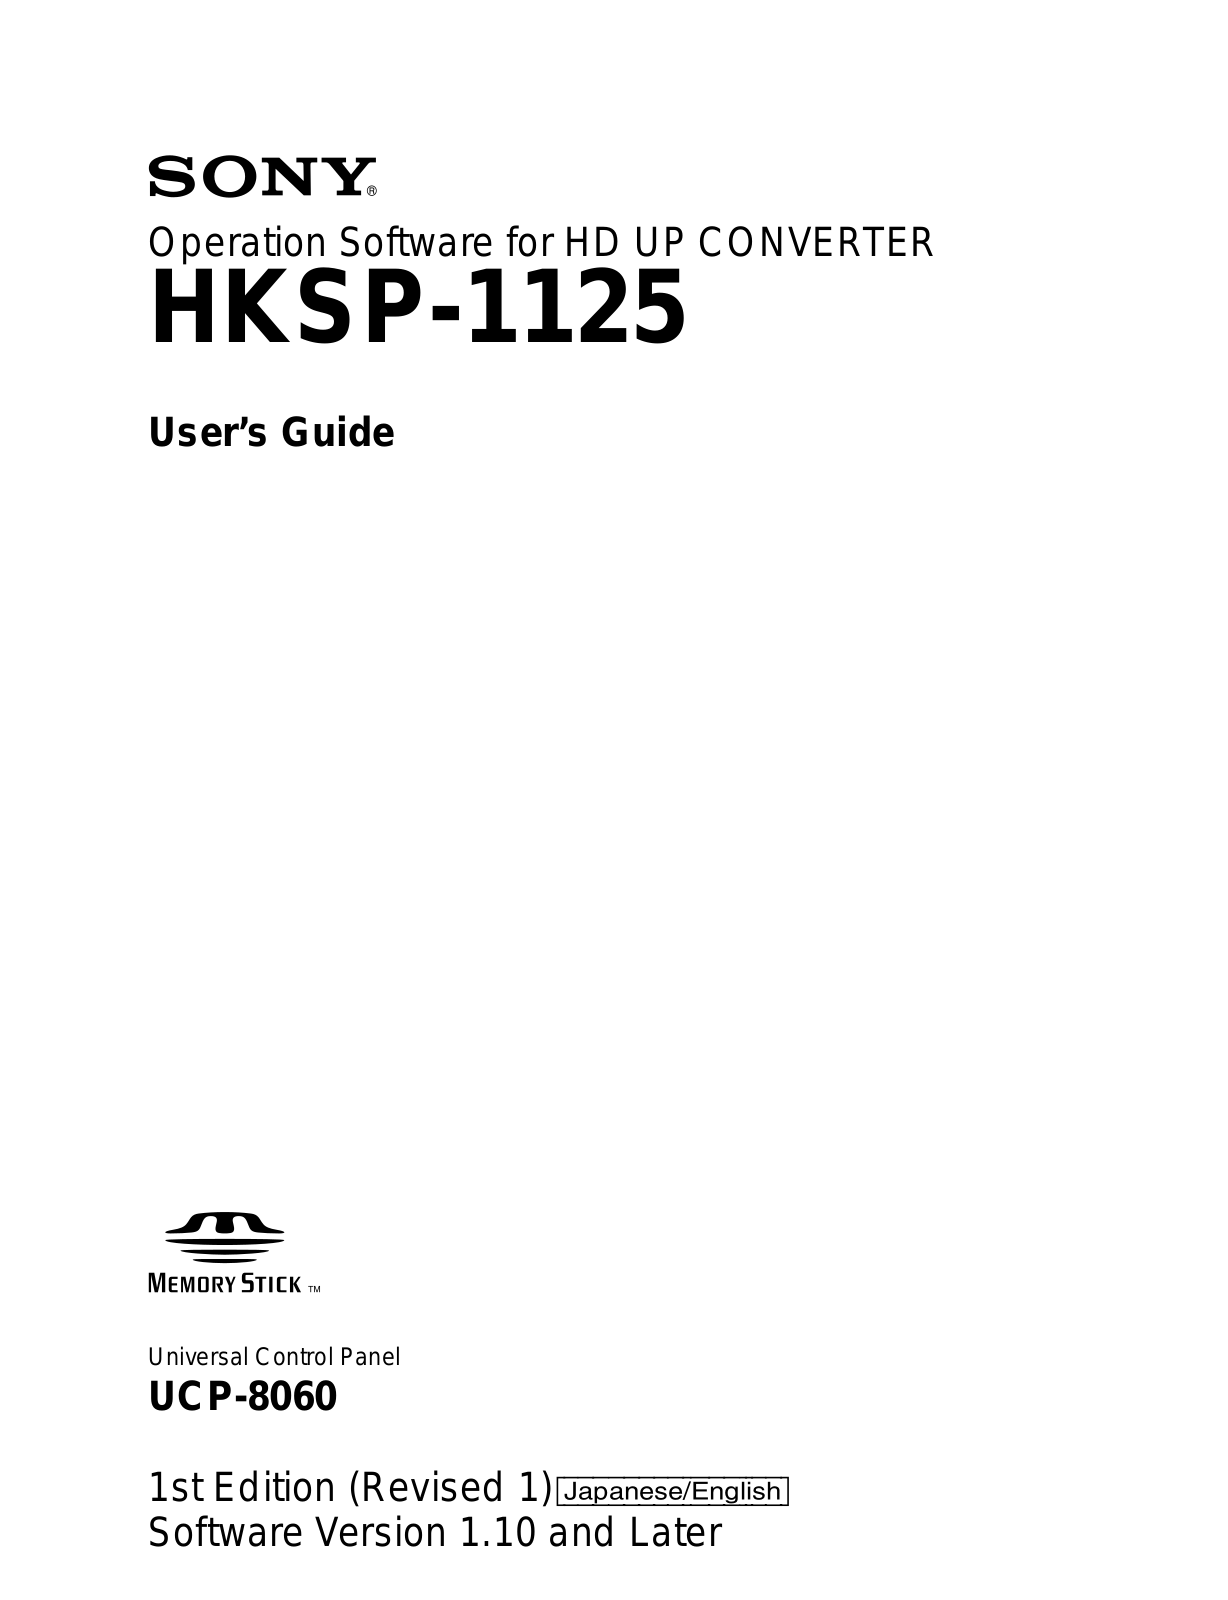 Sony HKSP-1125 OPERATING MANUAL